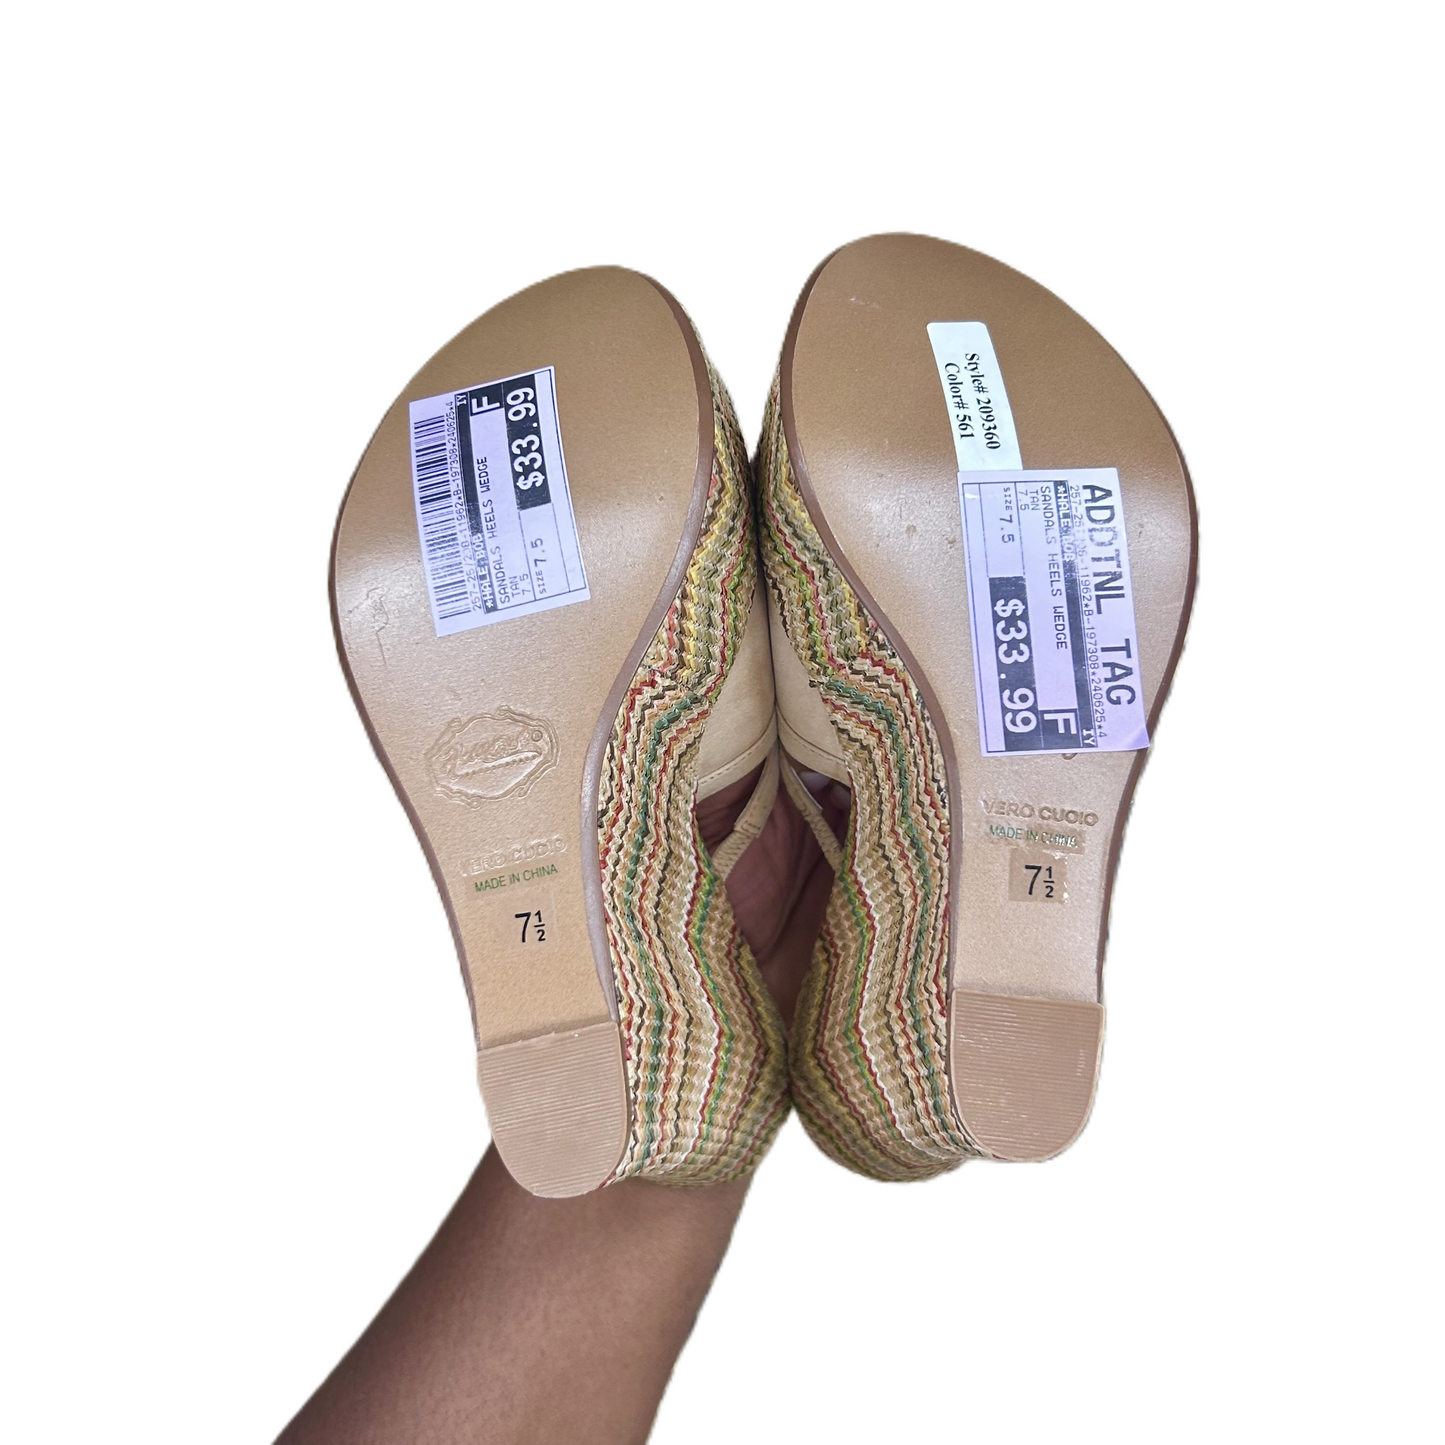 Tan Sandals Heels Wedge By Hale Bob, Size: 7.5